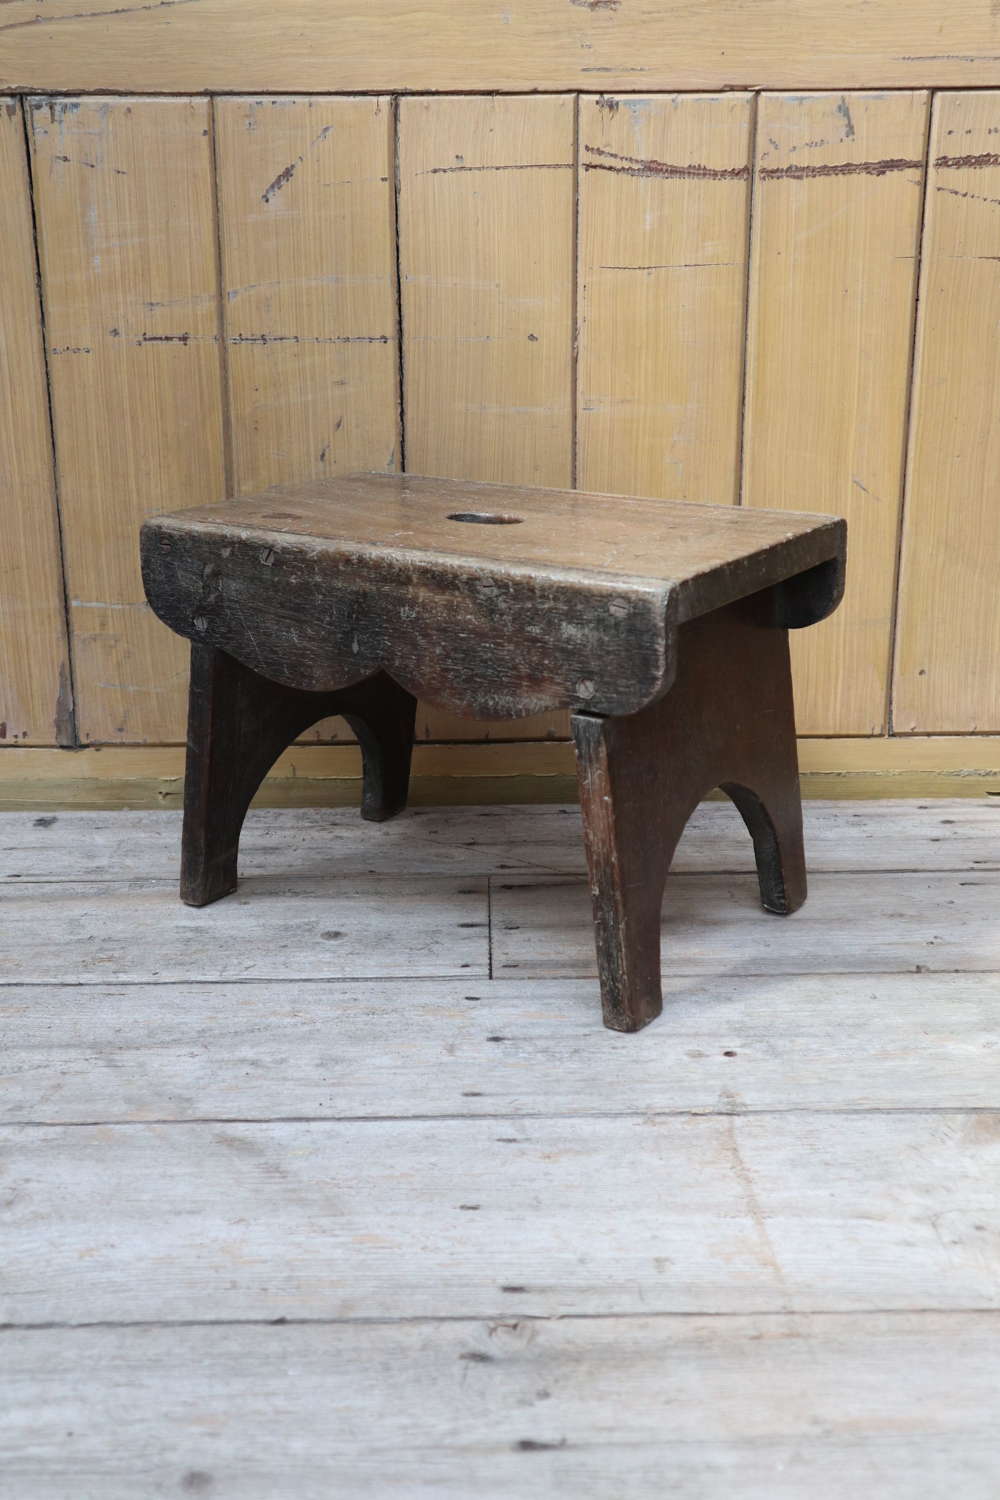 19th Century Scottish vernacular decorative creepie or boarded stool